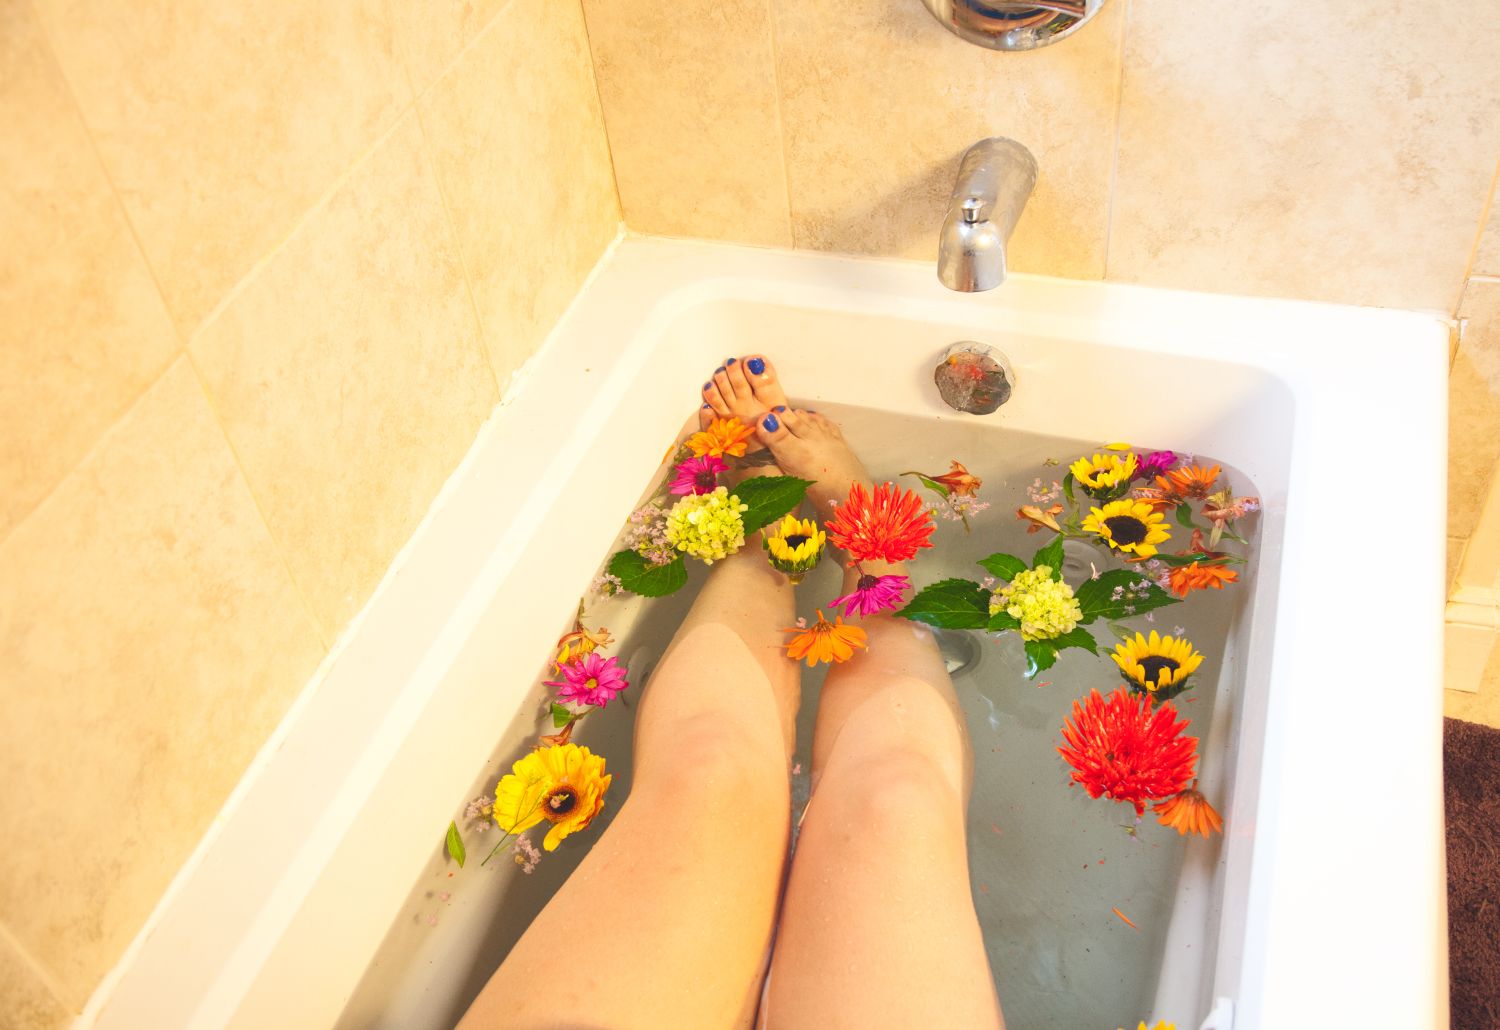 50 Ways To Make A Bath Special